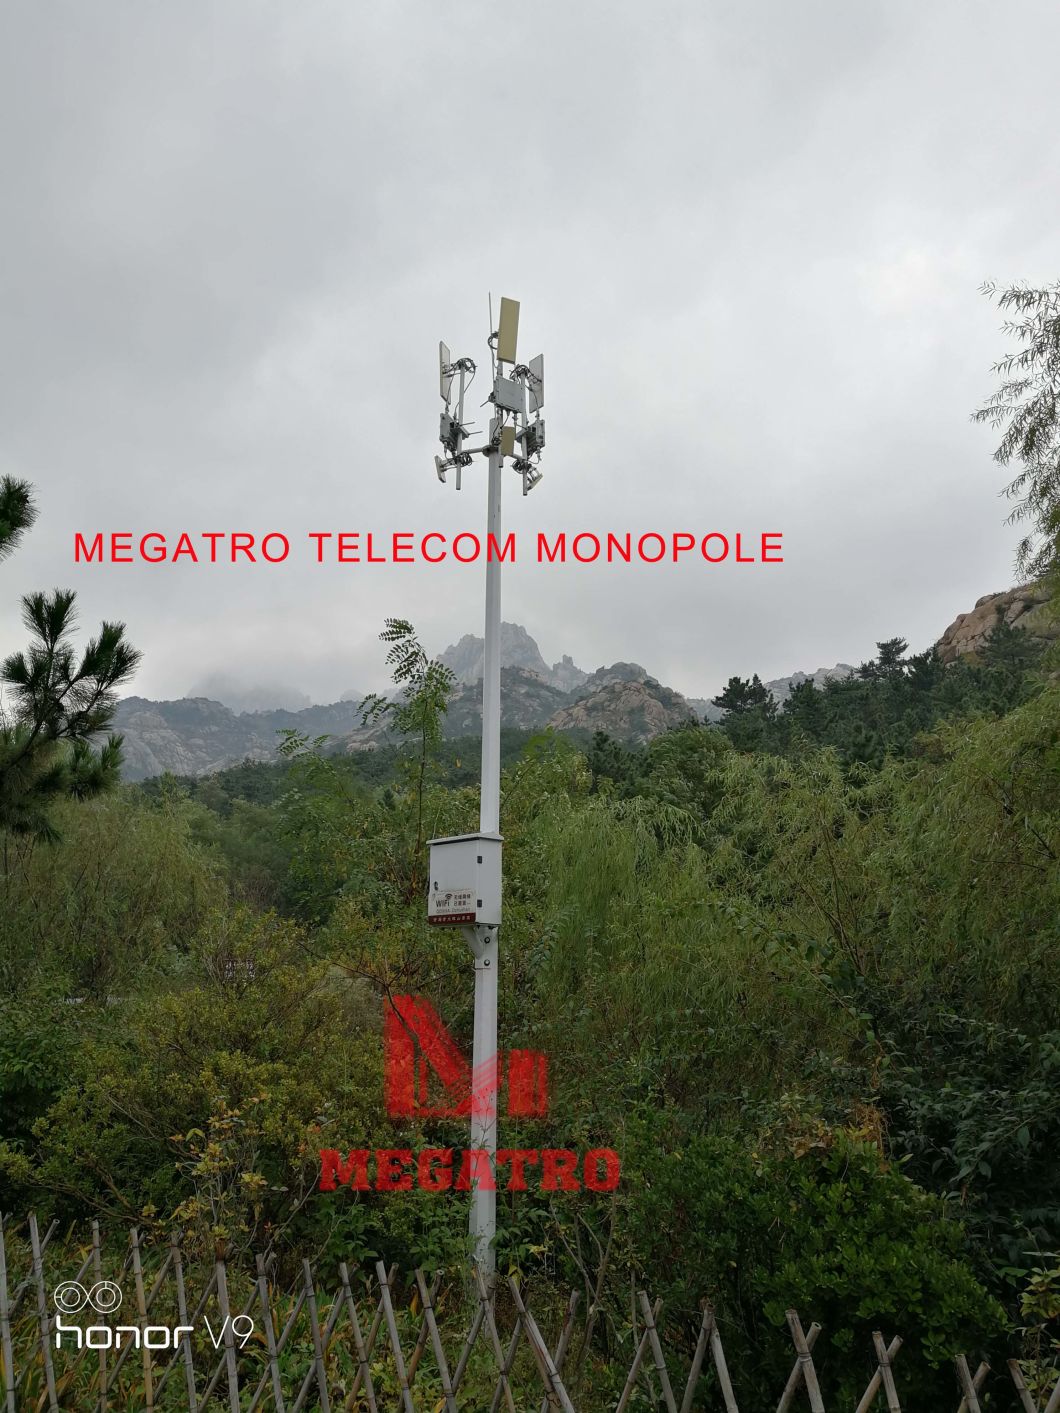 Megatro Telecom Self Pole Tower